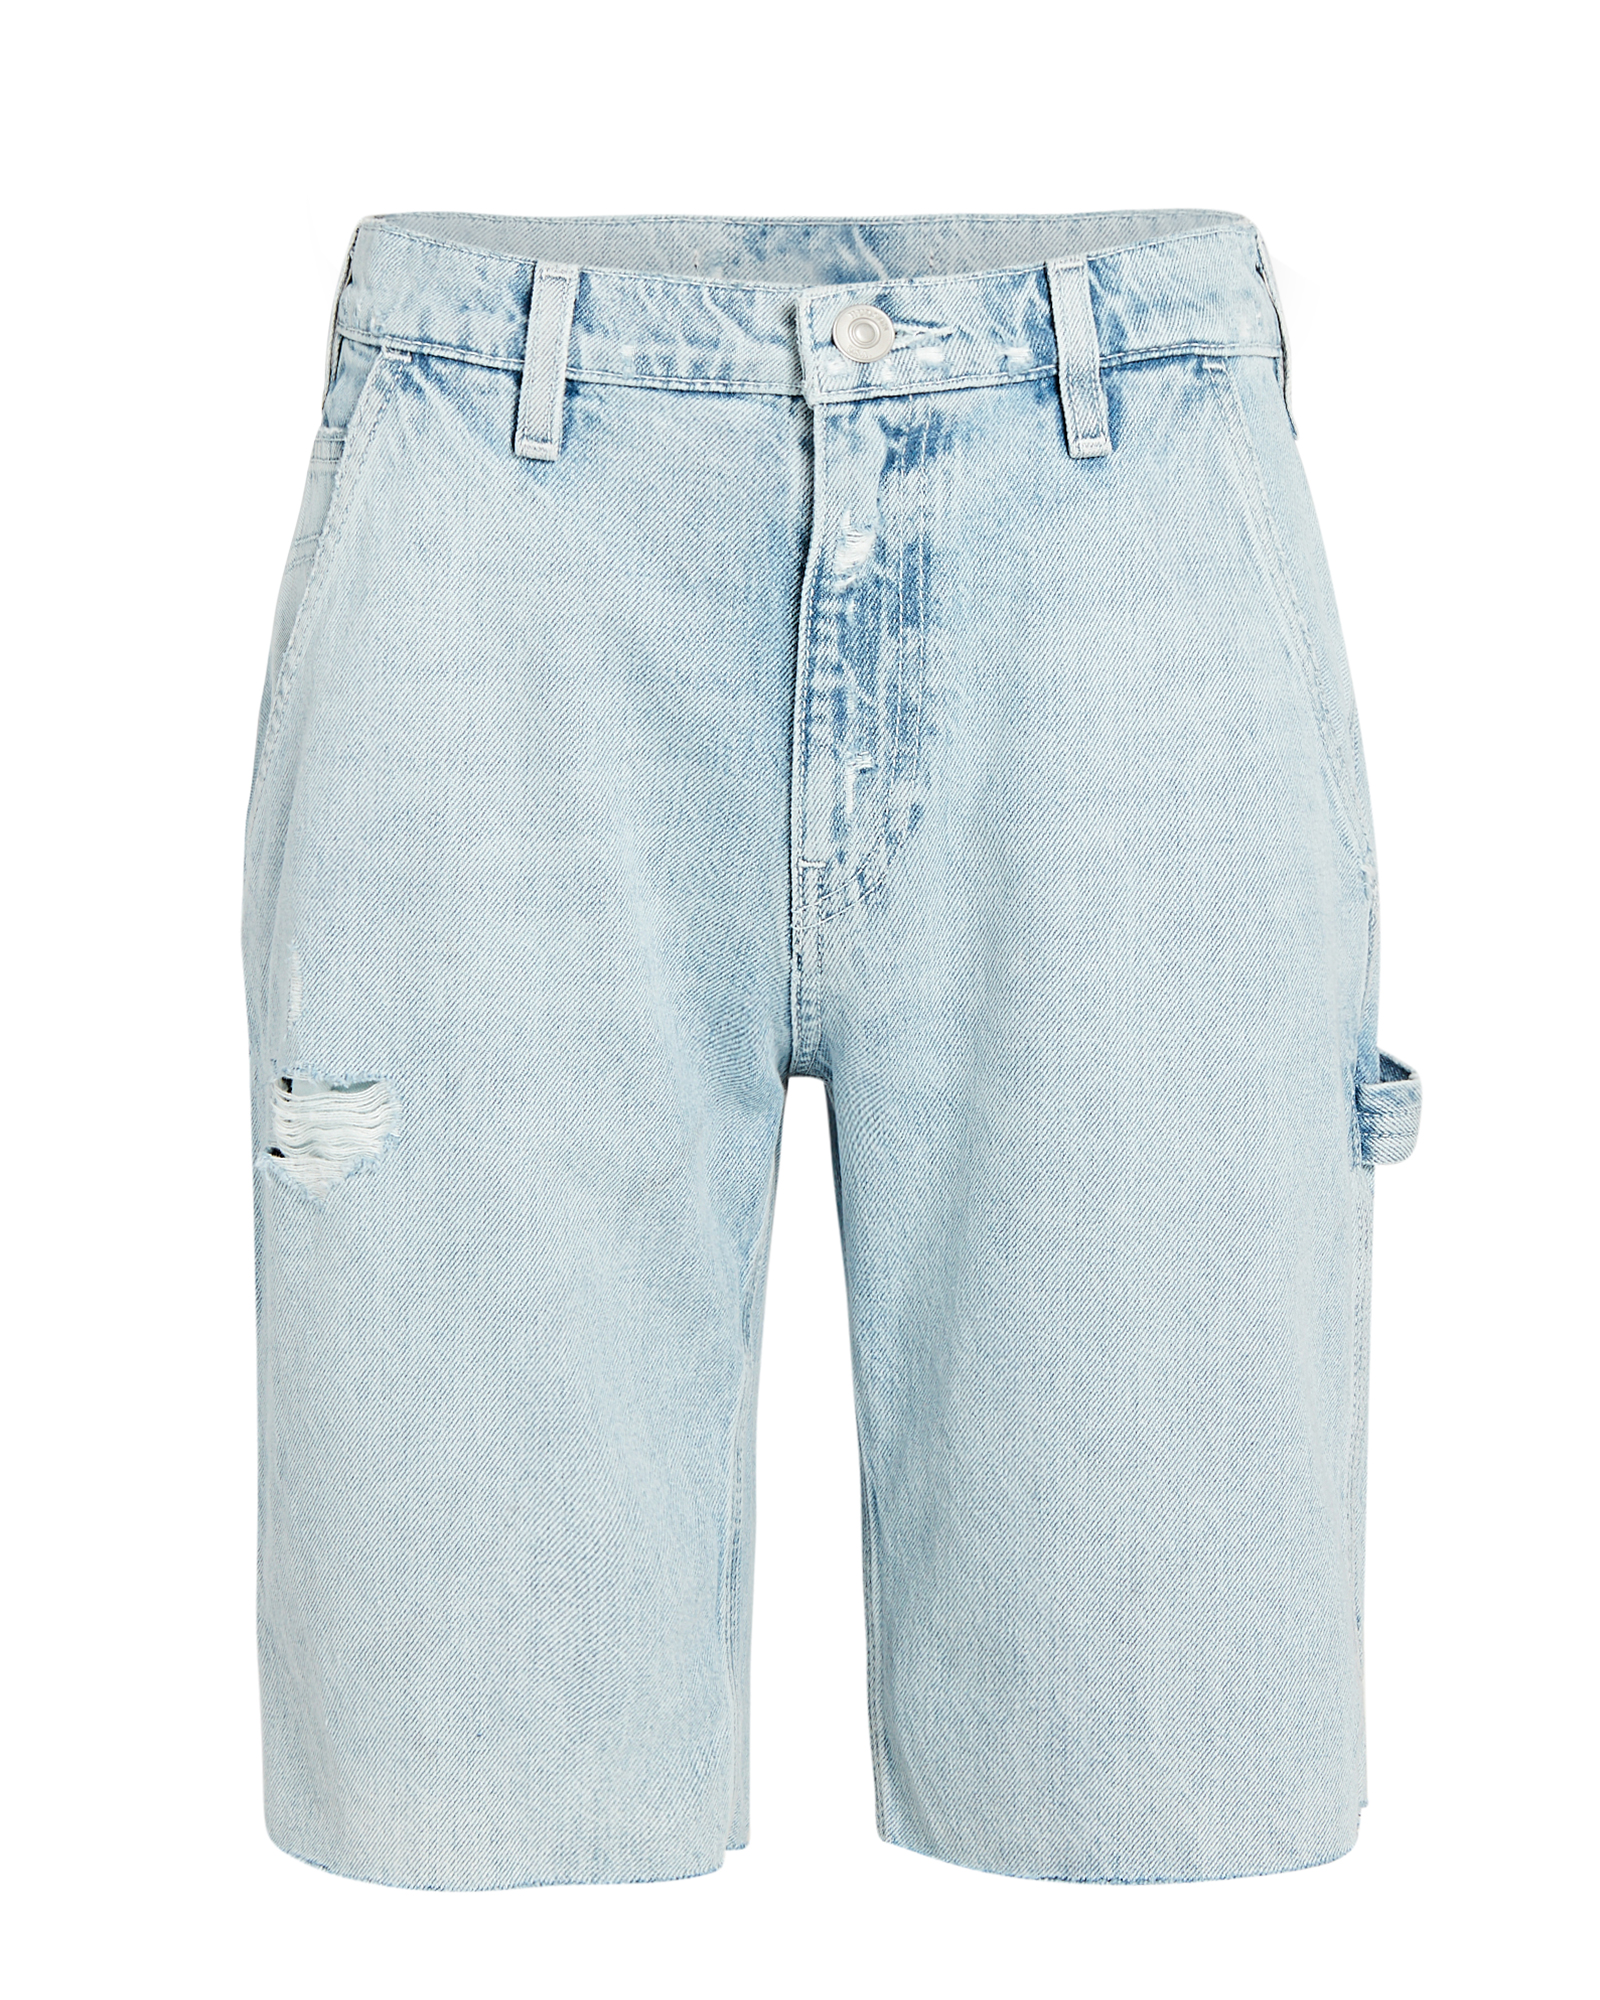 Hudson Jeans Carpenter Bermuda Denim Shorts | INTERMIX®